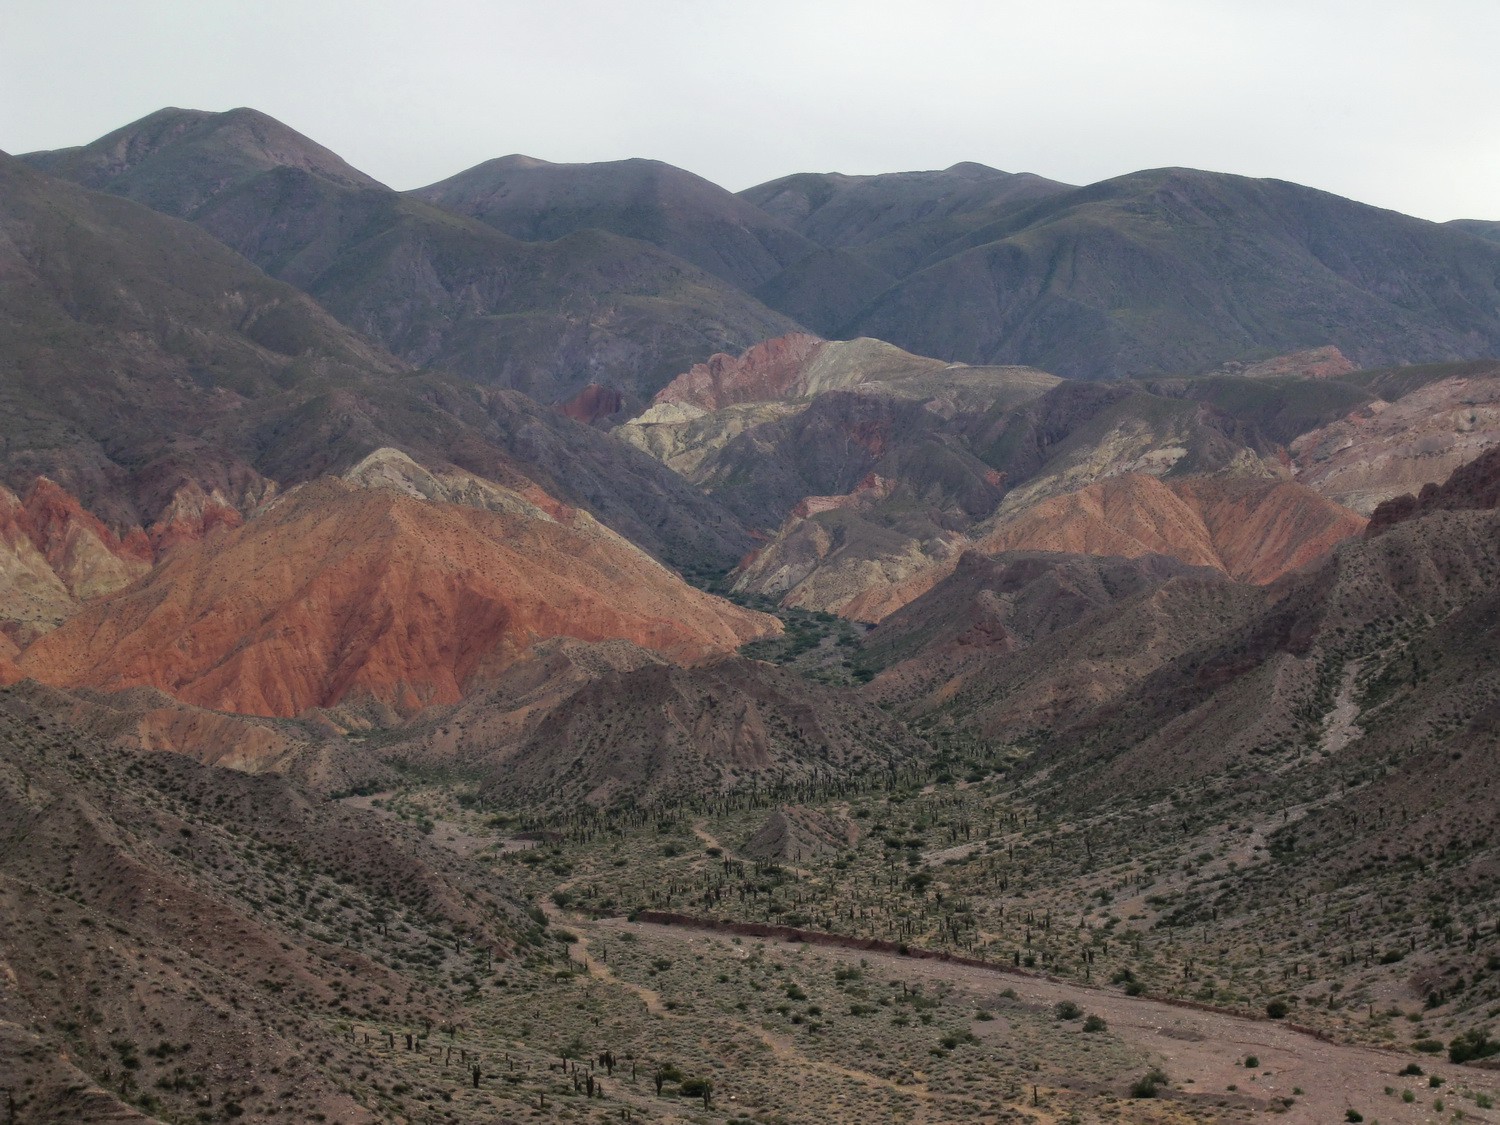 Colorful mountains of the Quebrada de Humahuaca